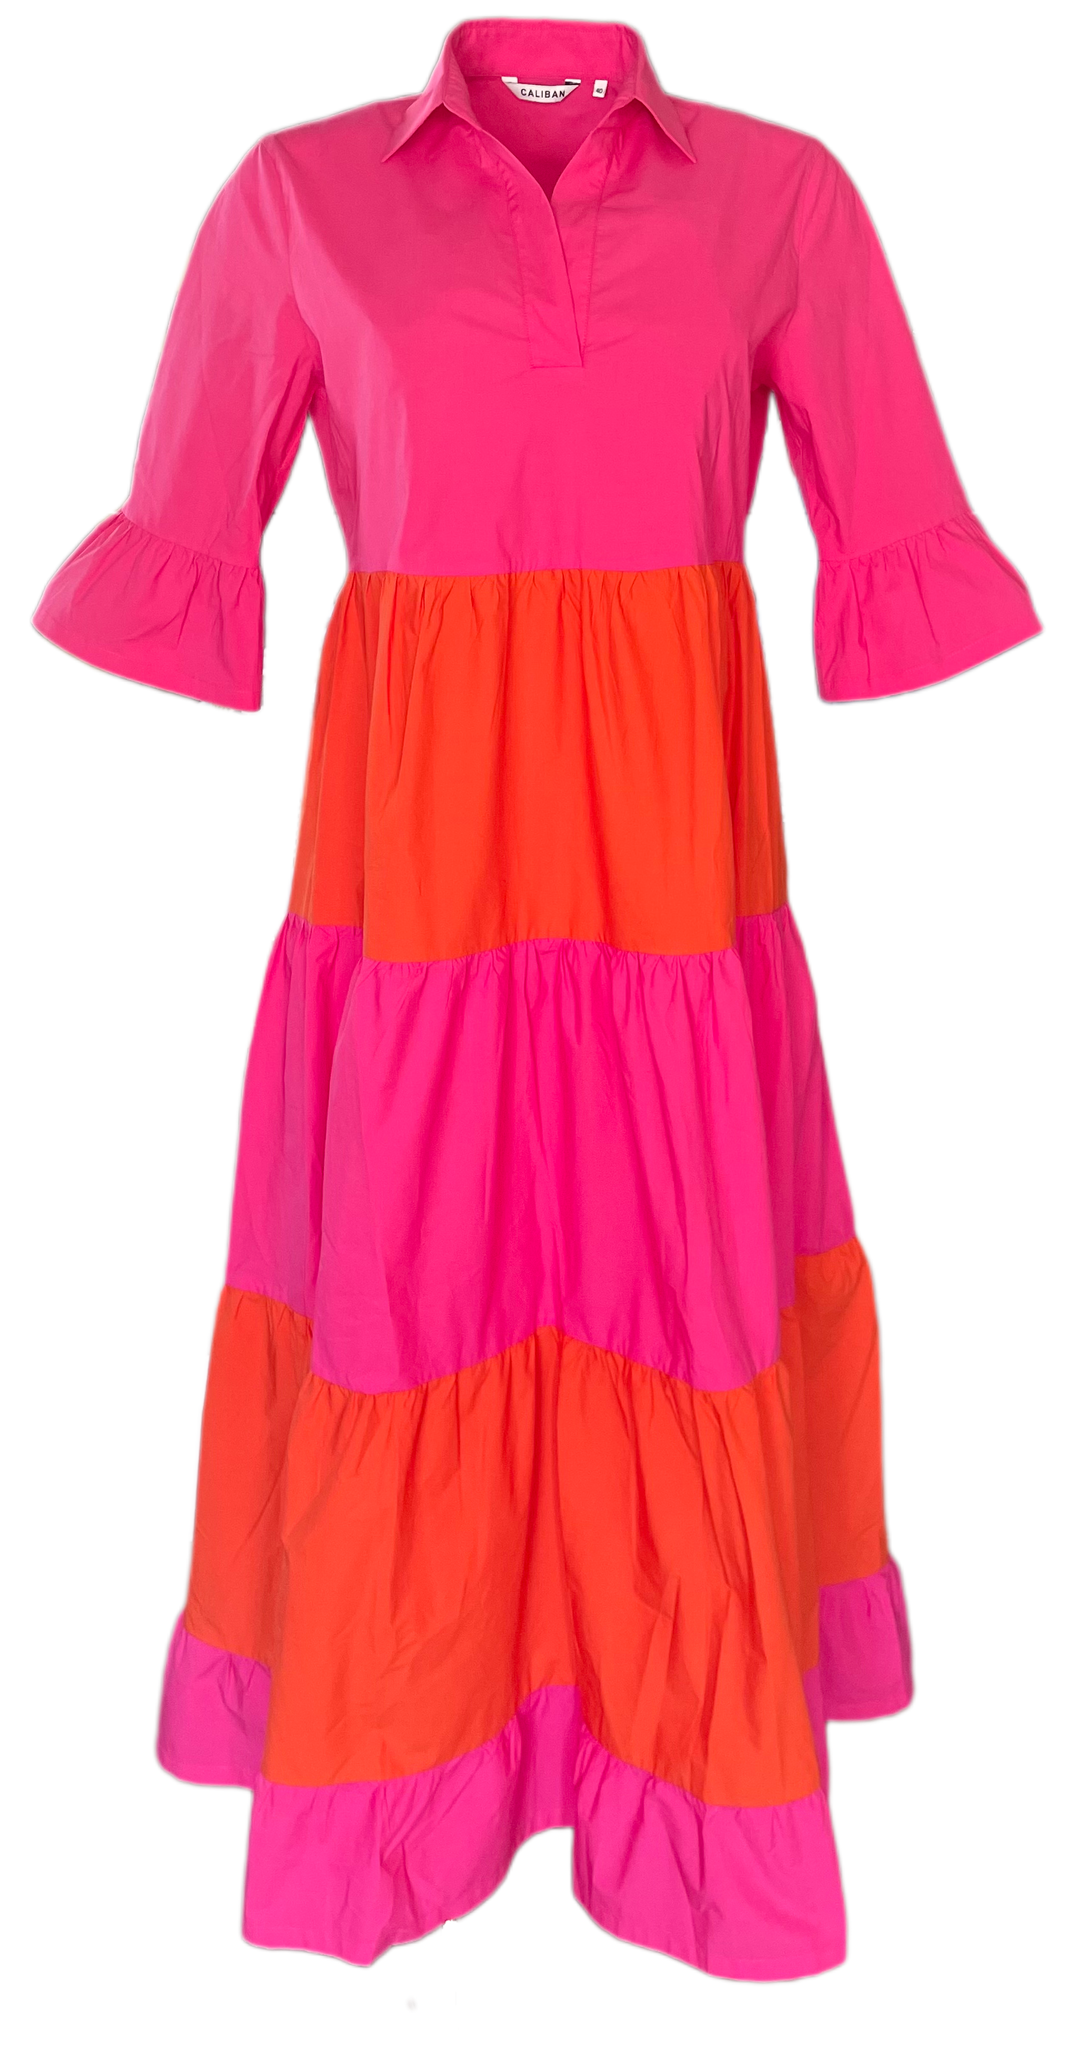 Ruffle Sleeve V-Neck Color Block Maxi Dress in Fuchsia/Orange